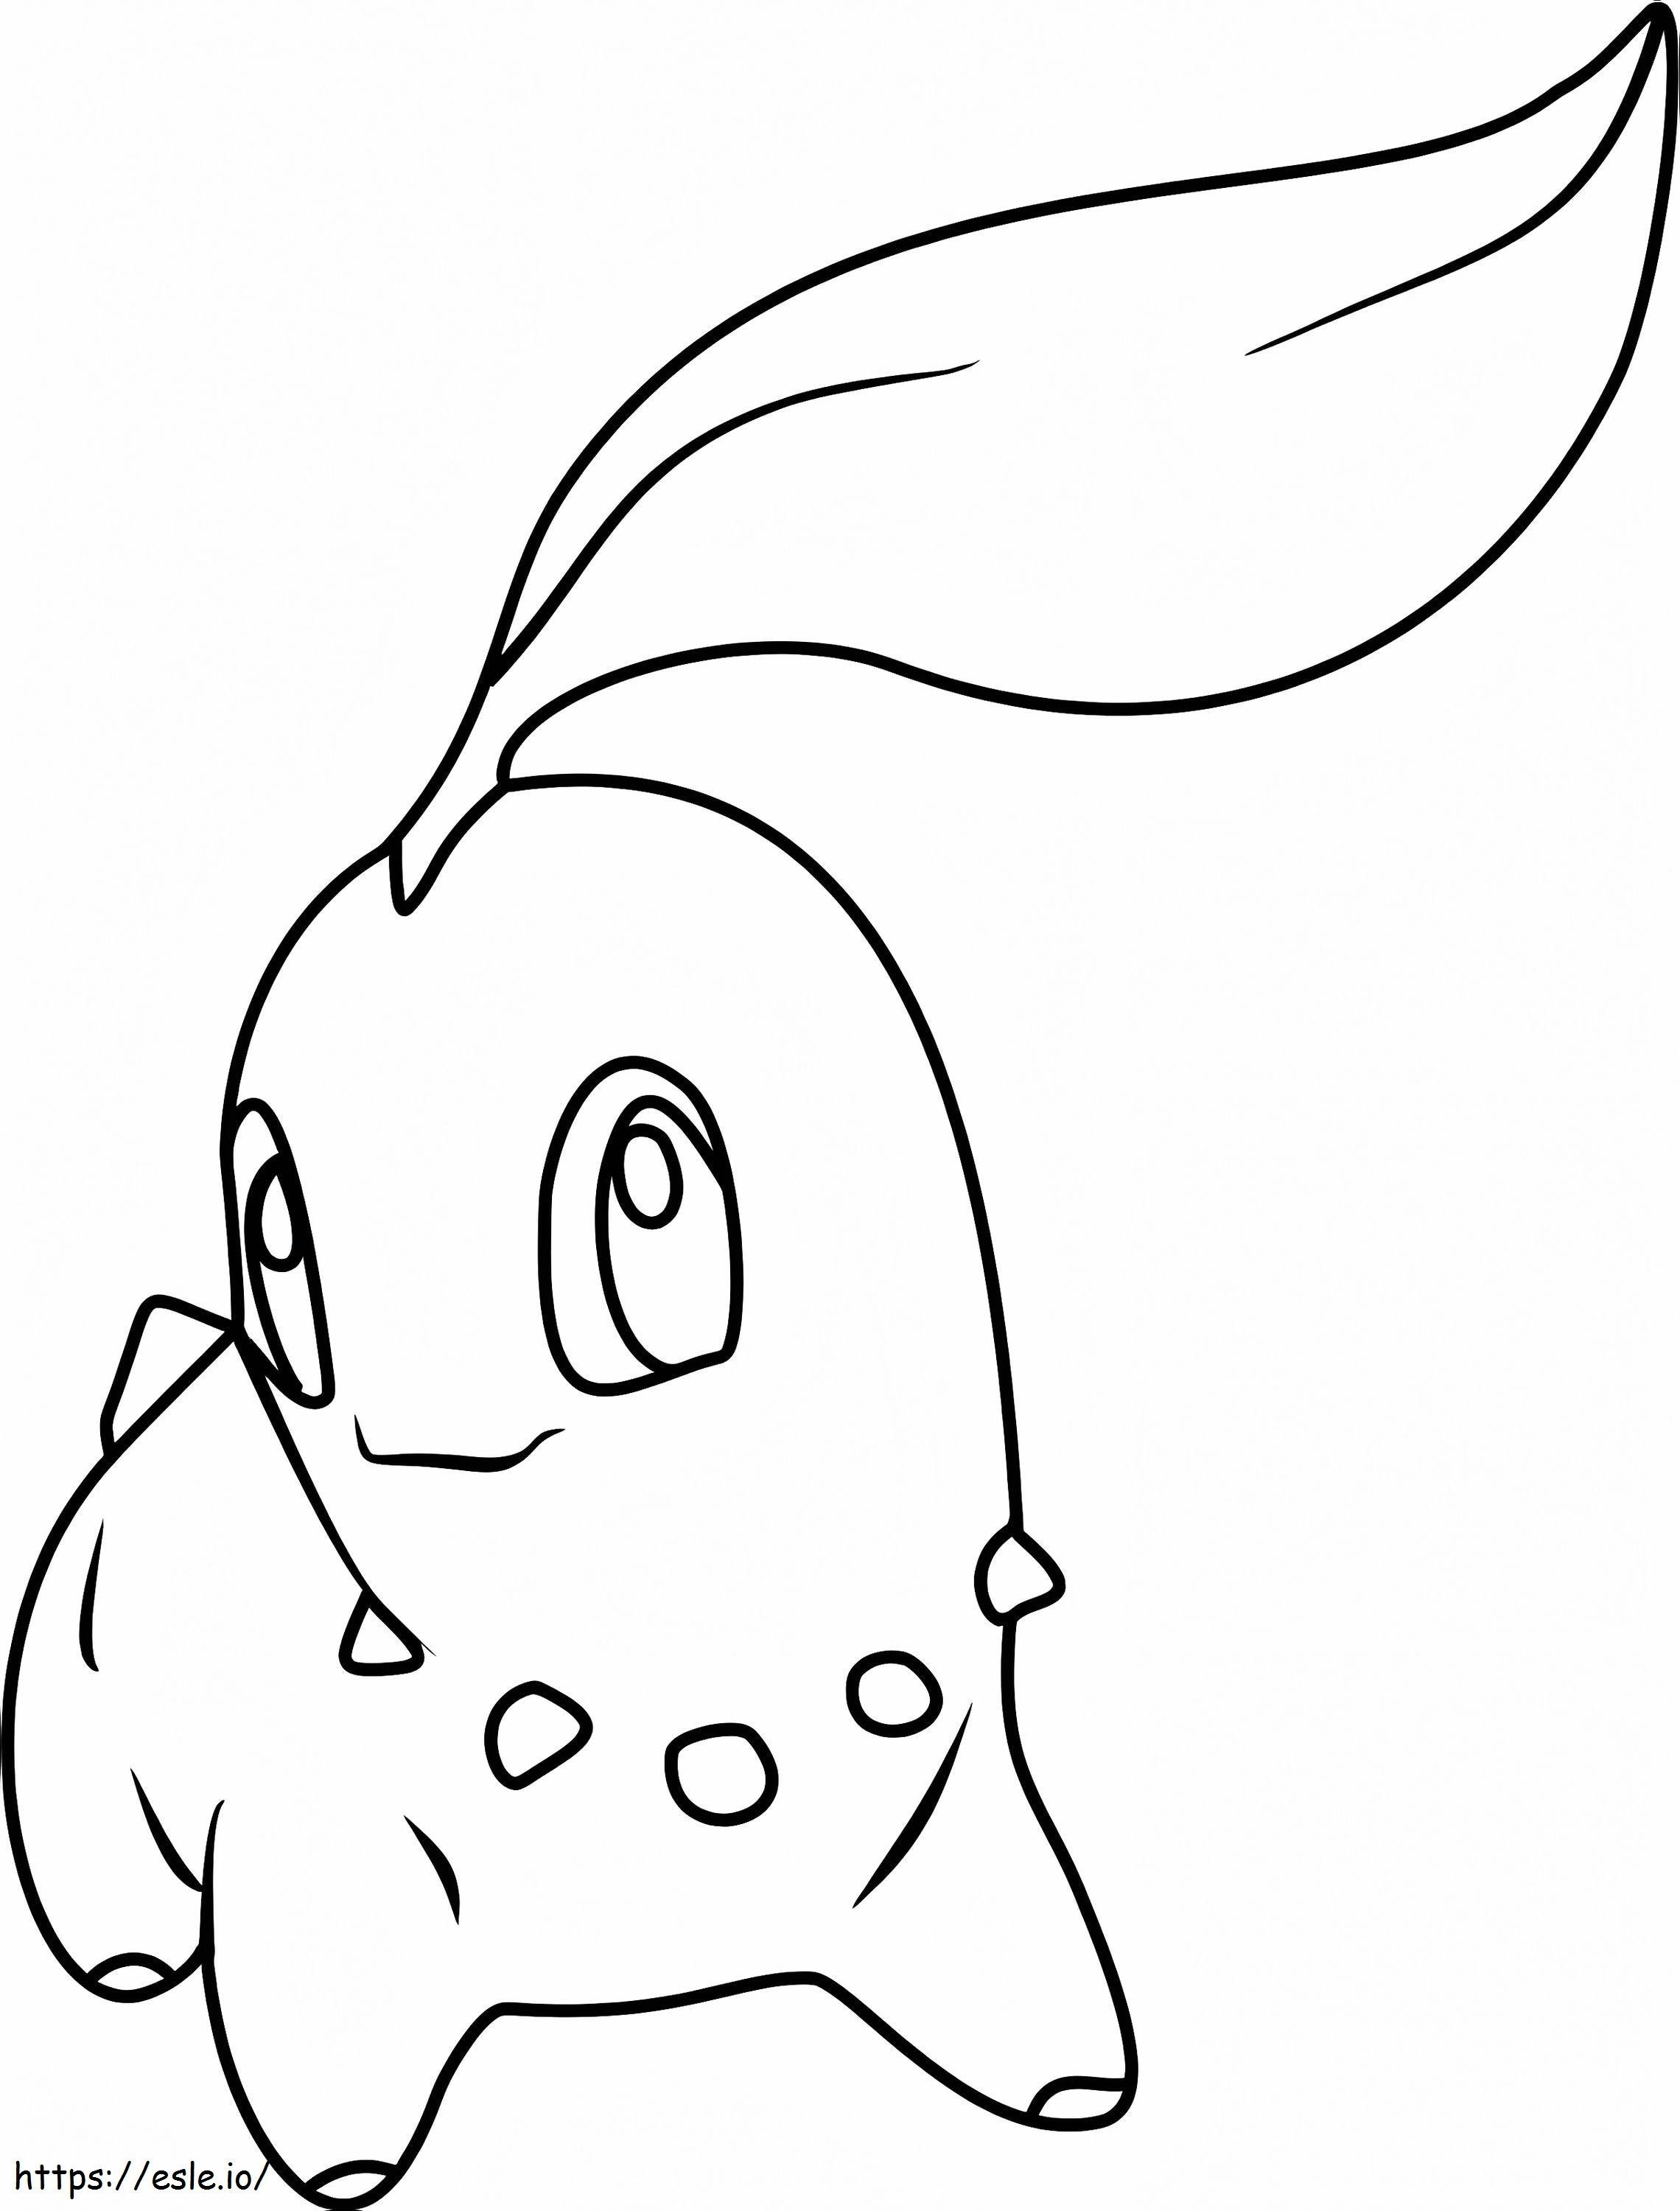 Pokémon Chikorita geração 2 para colorir